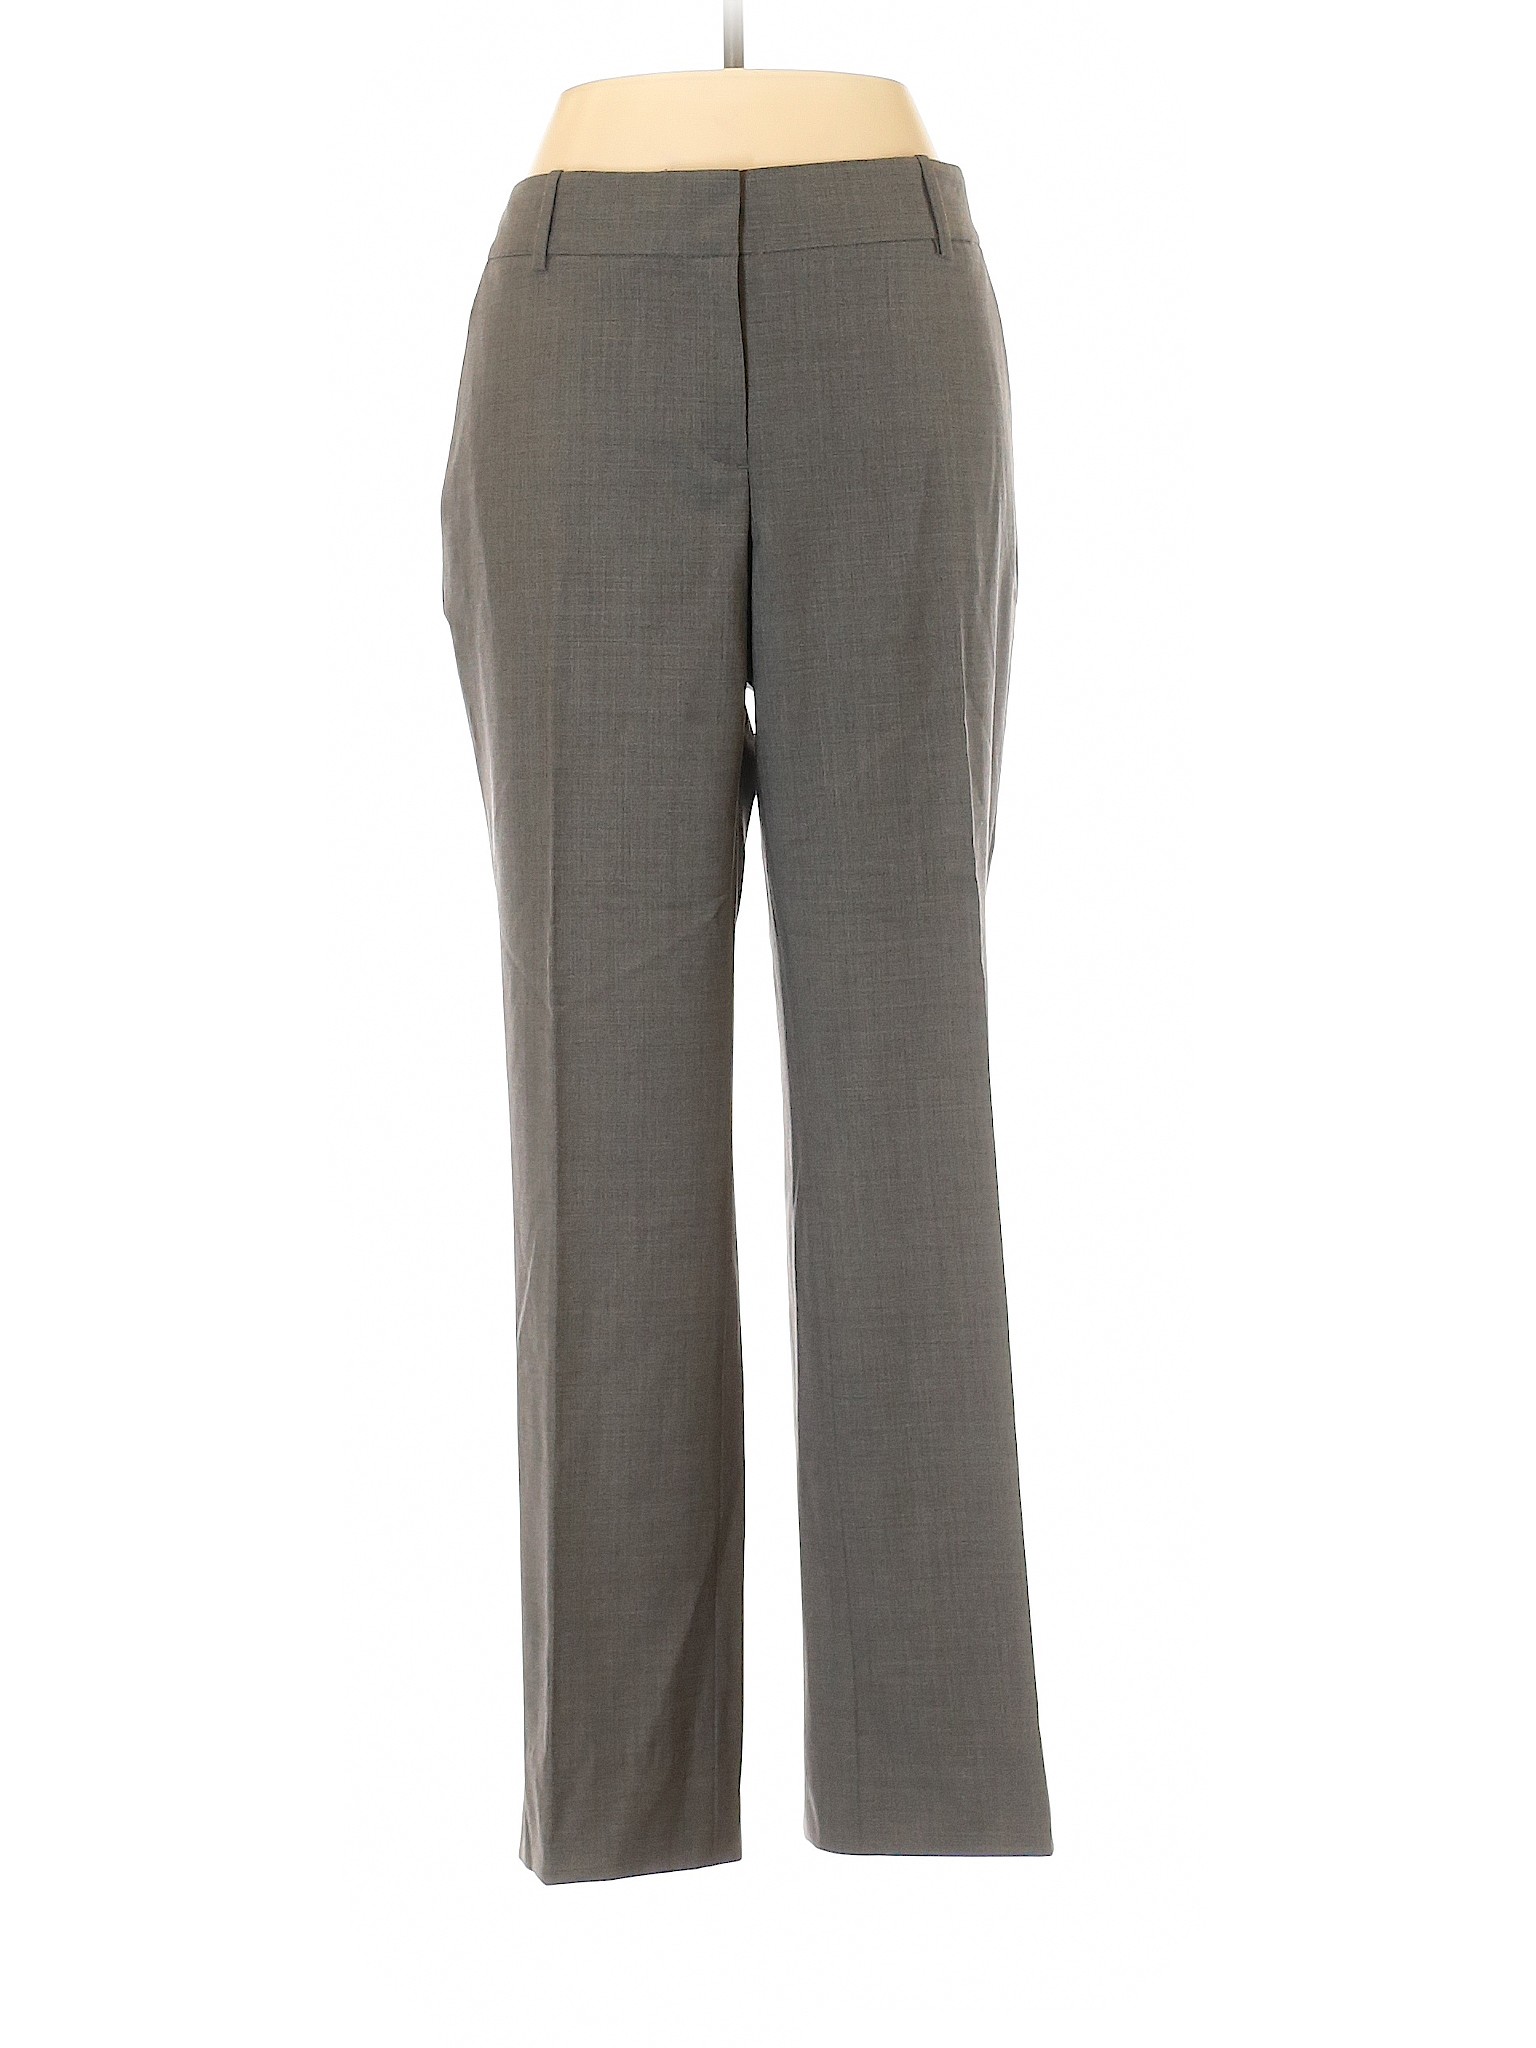 J.Crew Women Gray Wool Pants 8 | eBay